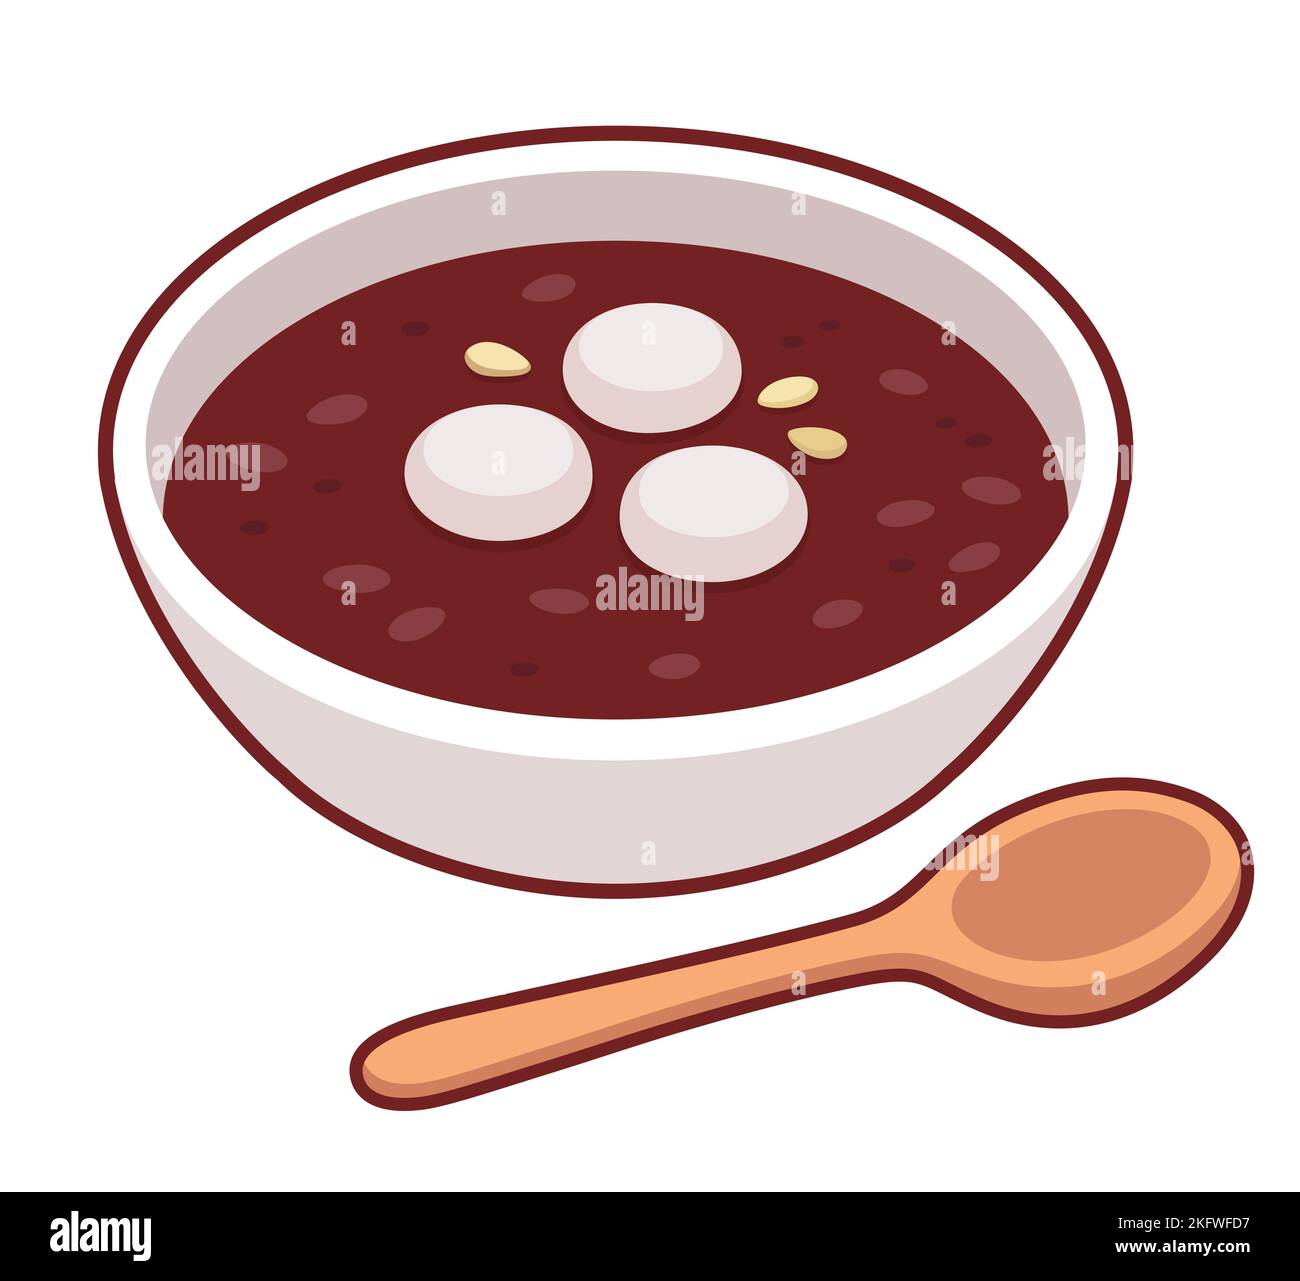 팥죽 Patjuk, soupe traditionnelle coréenne de porridge aux haricots rouges pour le solstice d'hiver (Dongji). Illustration de clip art vectoriel de dessin animé. Illustration de Vecteur